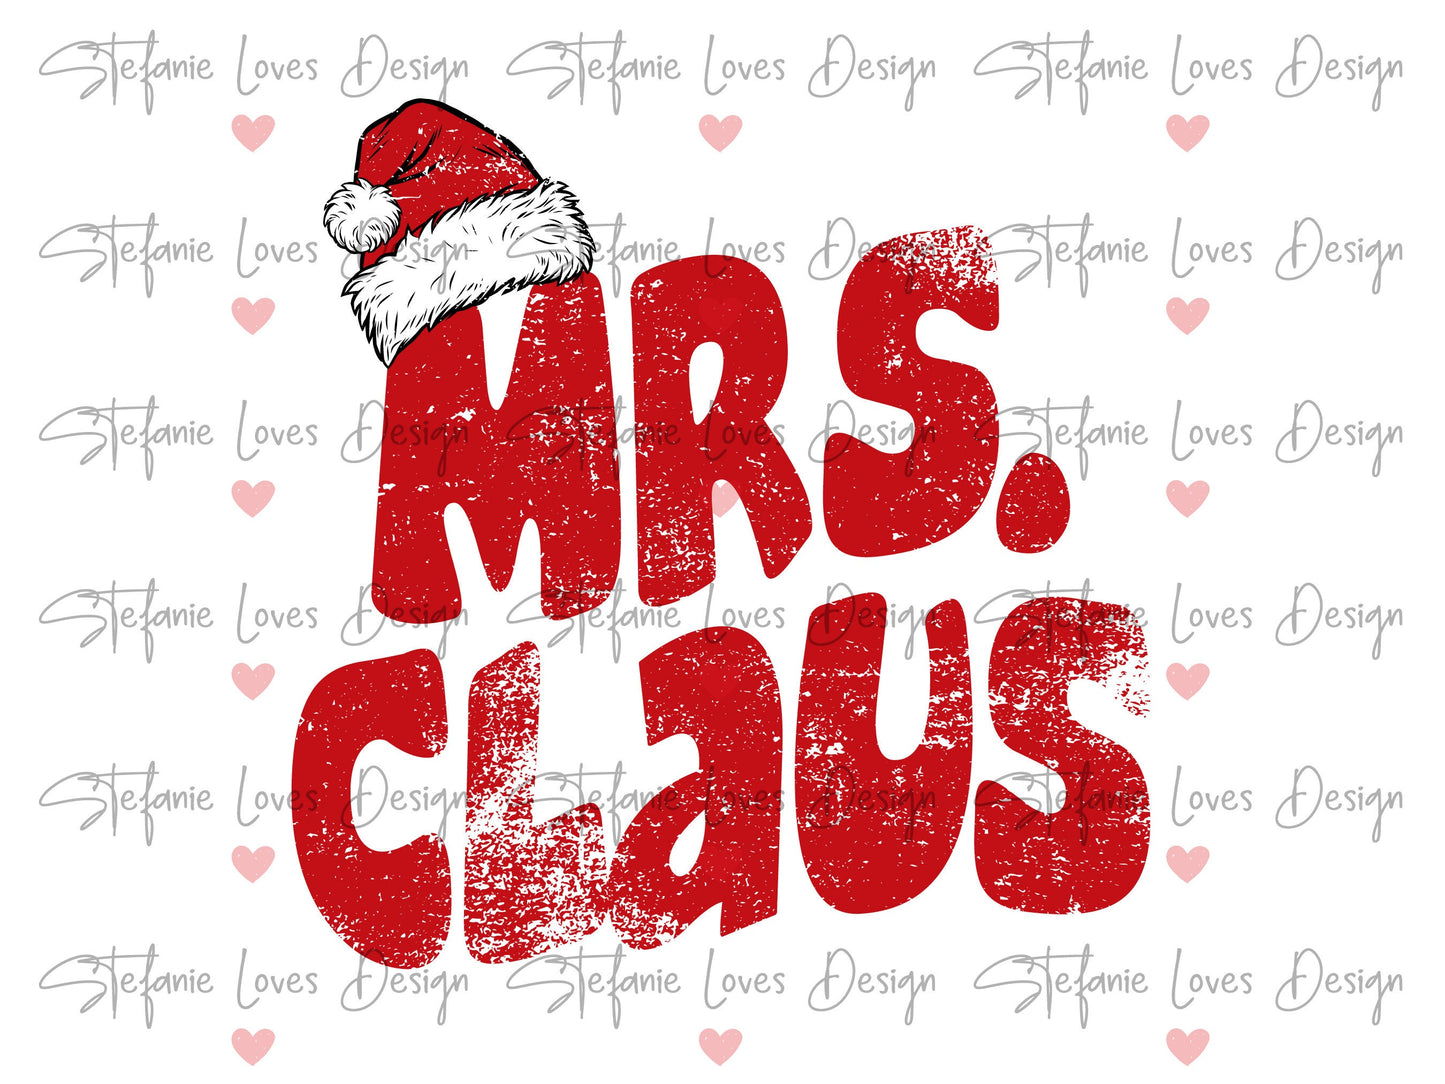 Mrs Claus PNG, Mrs Santa Claus Christmas distressed png, Holiday shirt png, Digital Design